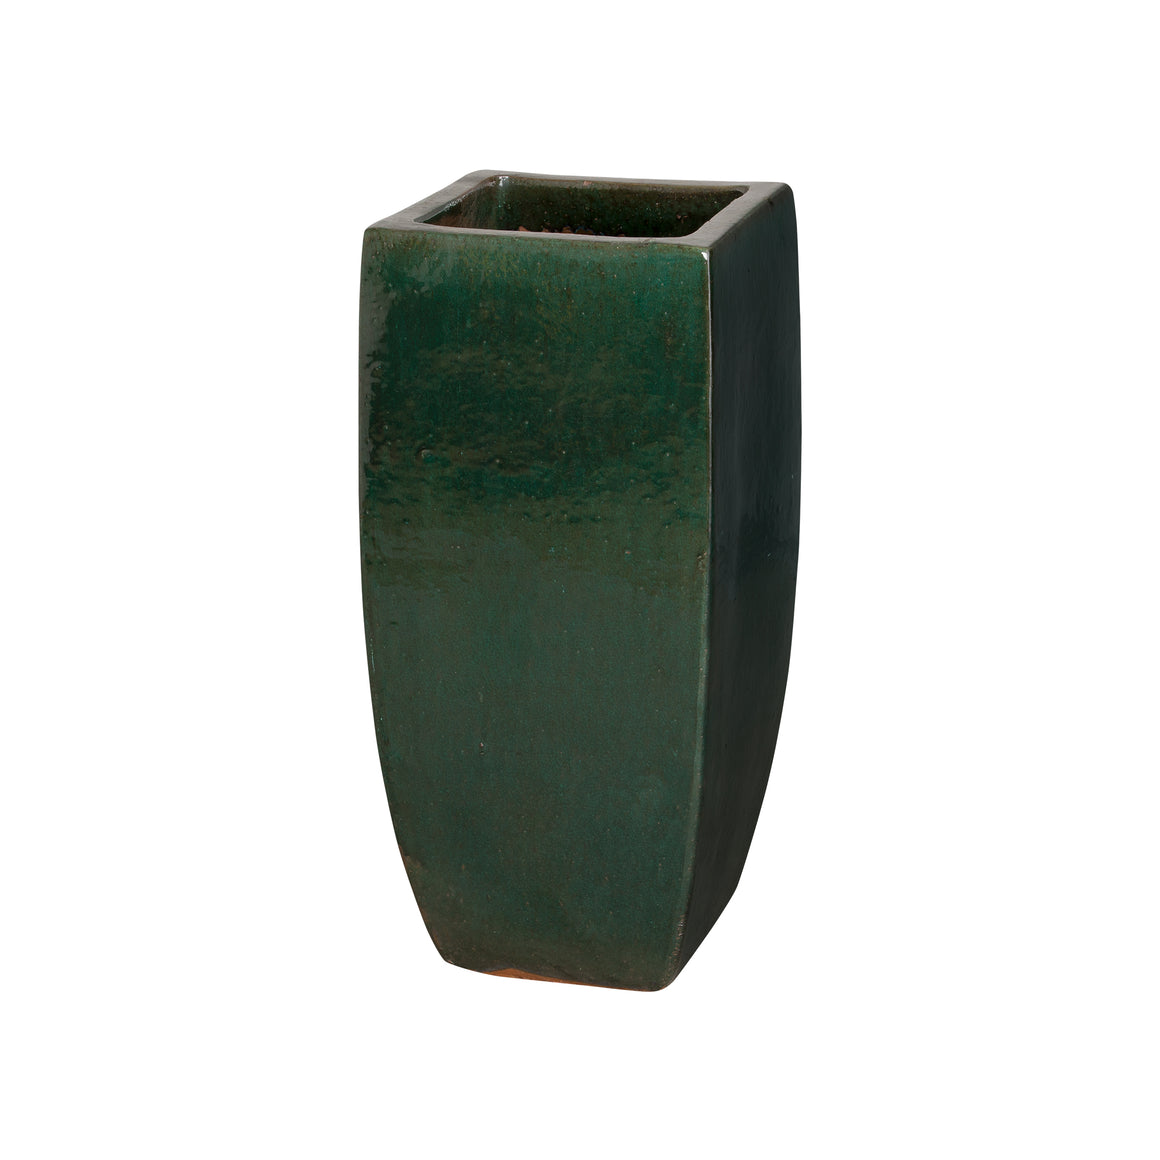 Tall Square Emerald Green Ceramic Planter - Medium